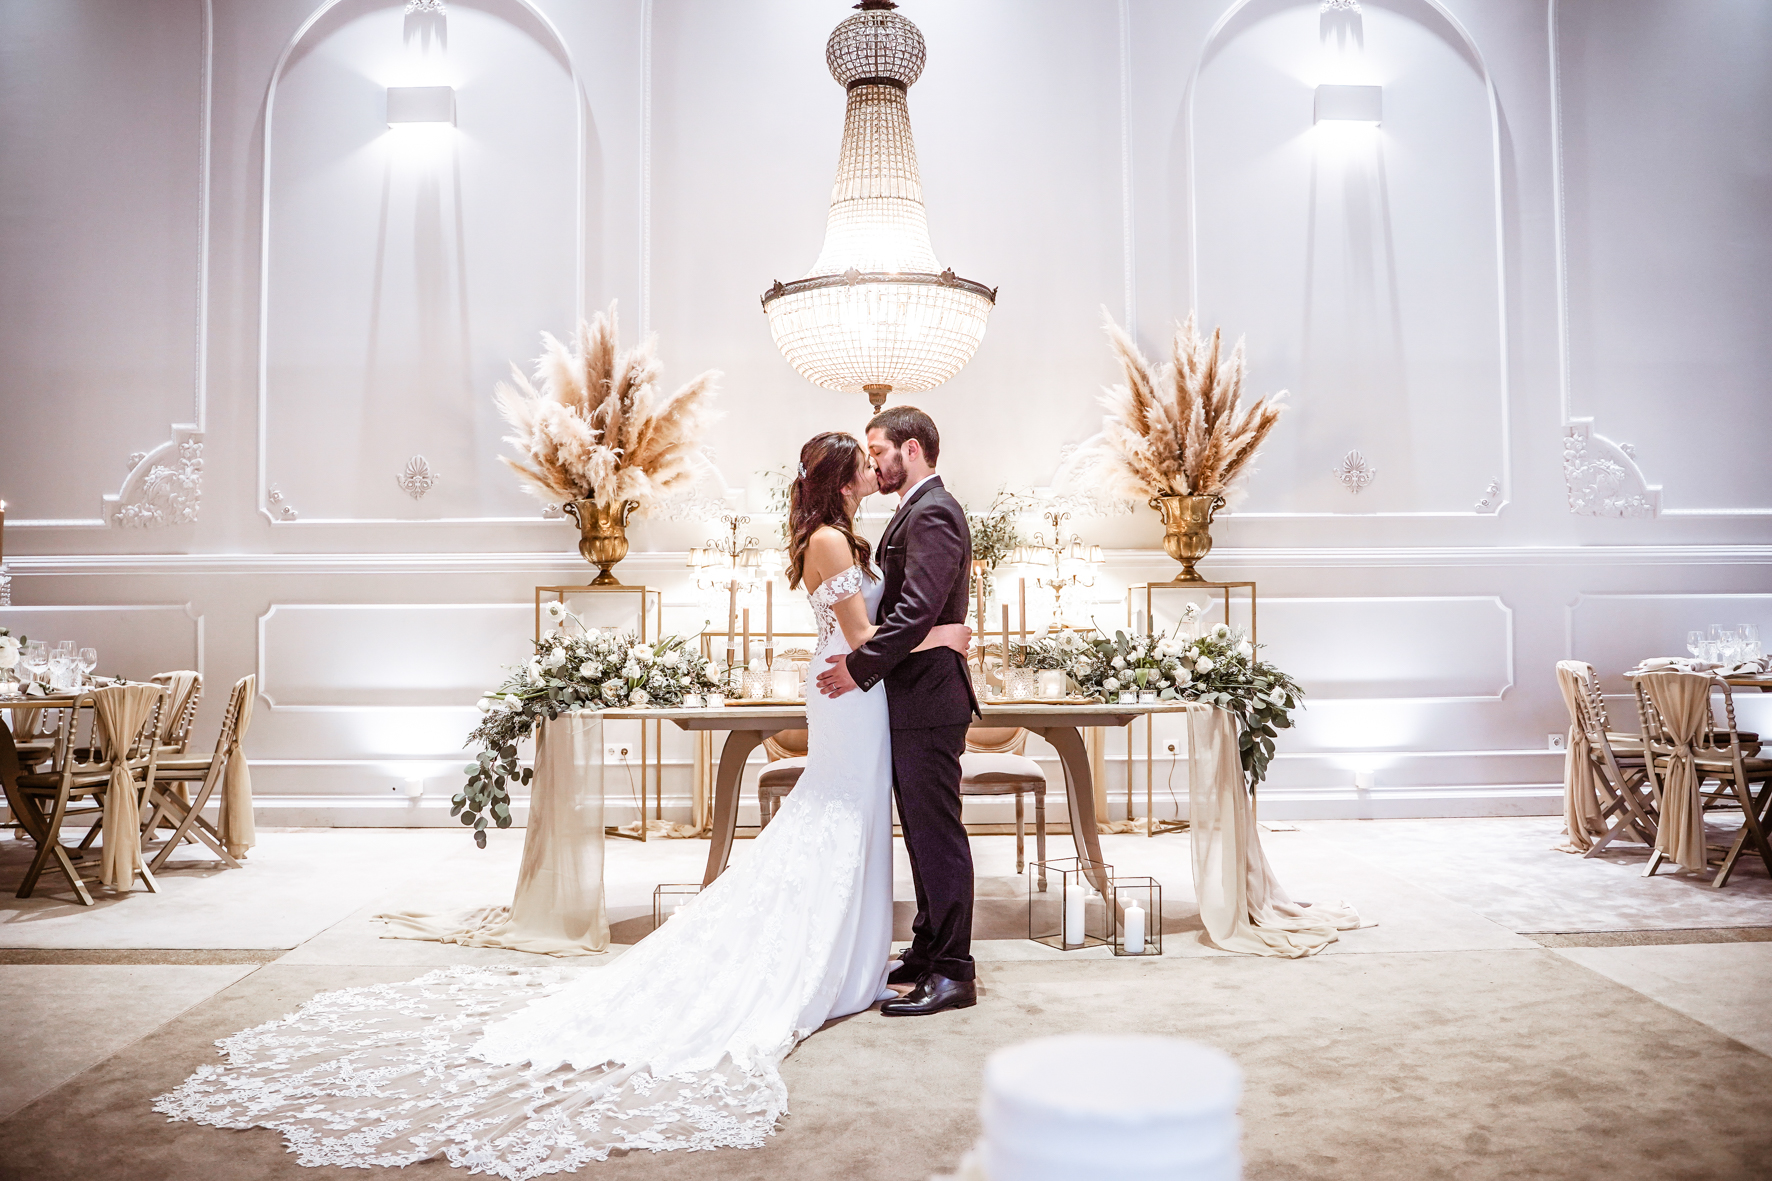 Insonia Wedding: testemunhar e eternizar os momentos mais românticos!